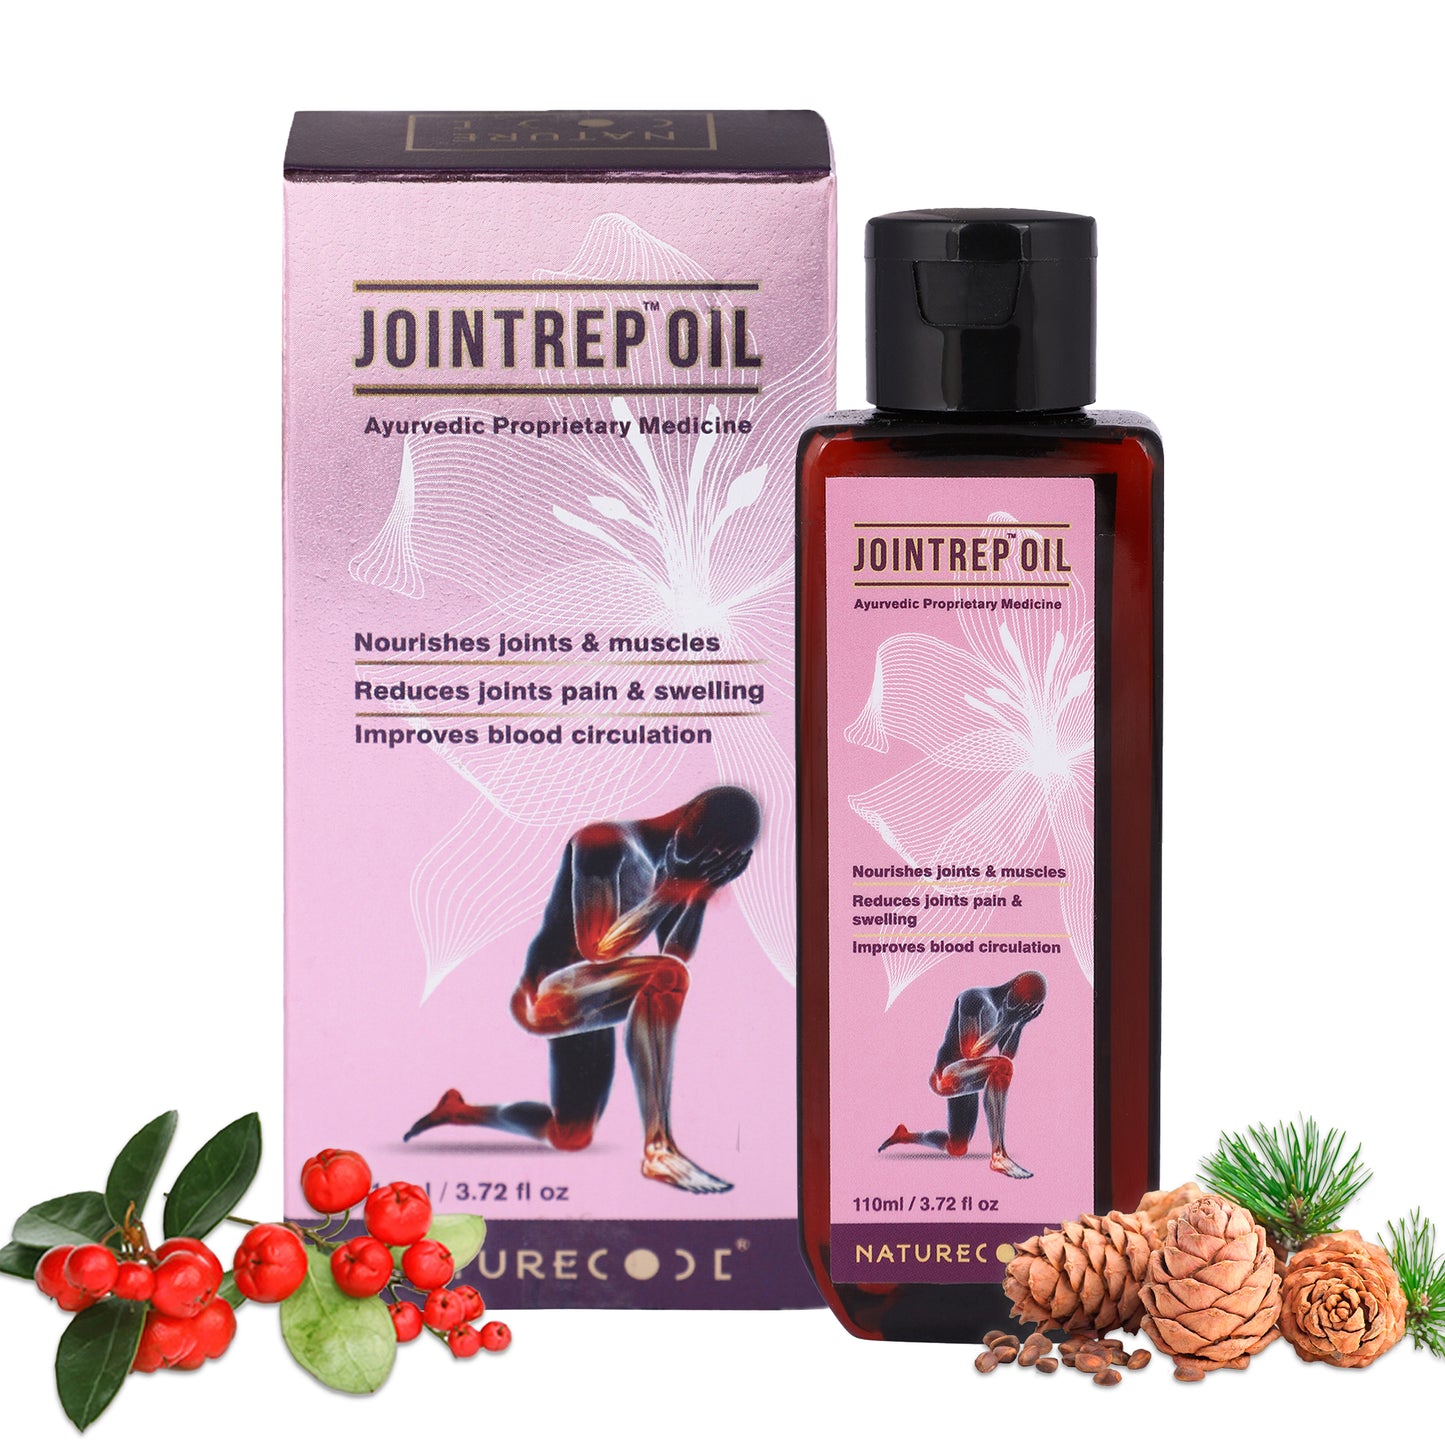 Jointrep™ Oil